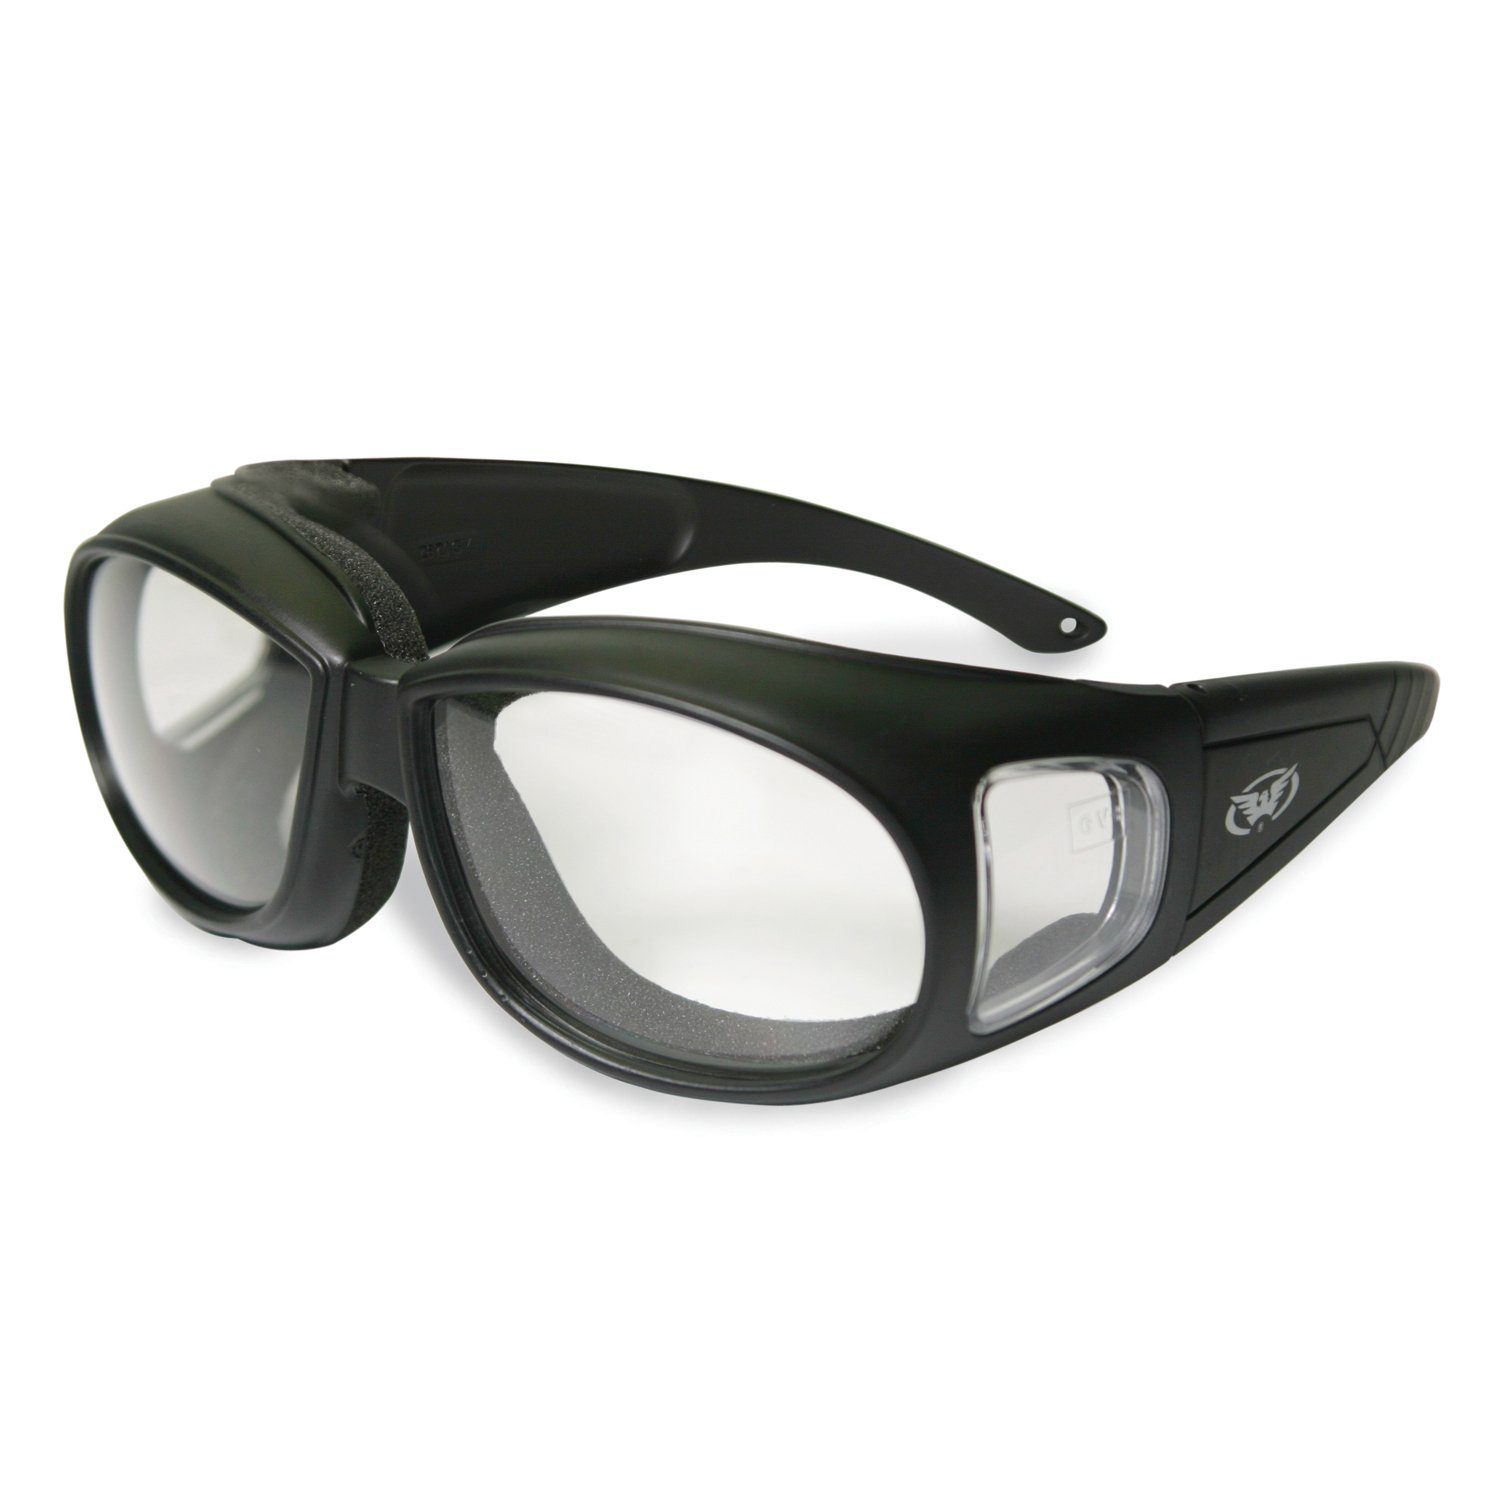 Motorradbrille Outfitter 24 Vision Global Global Vision CL